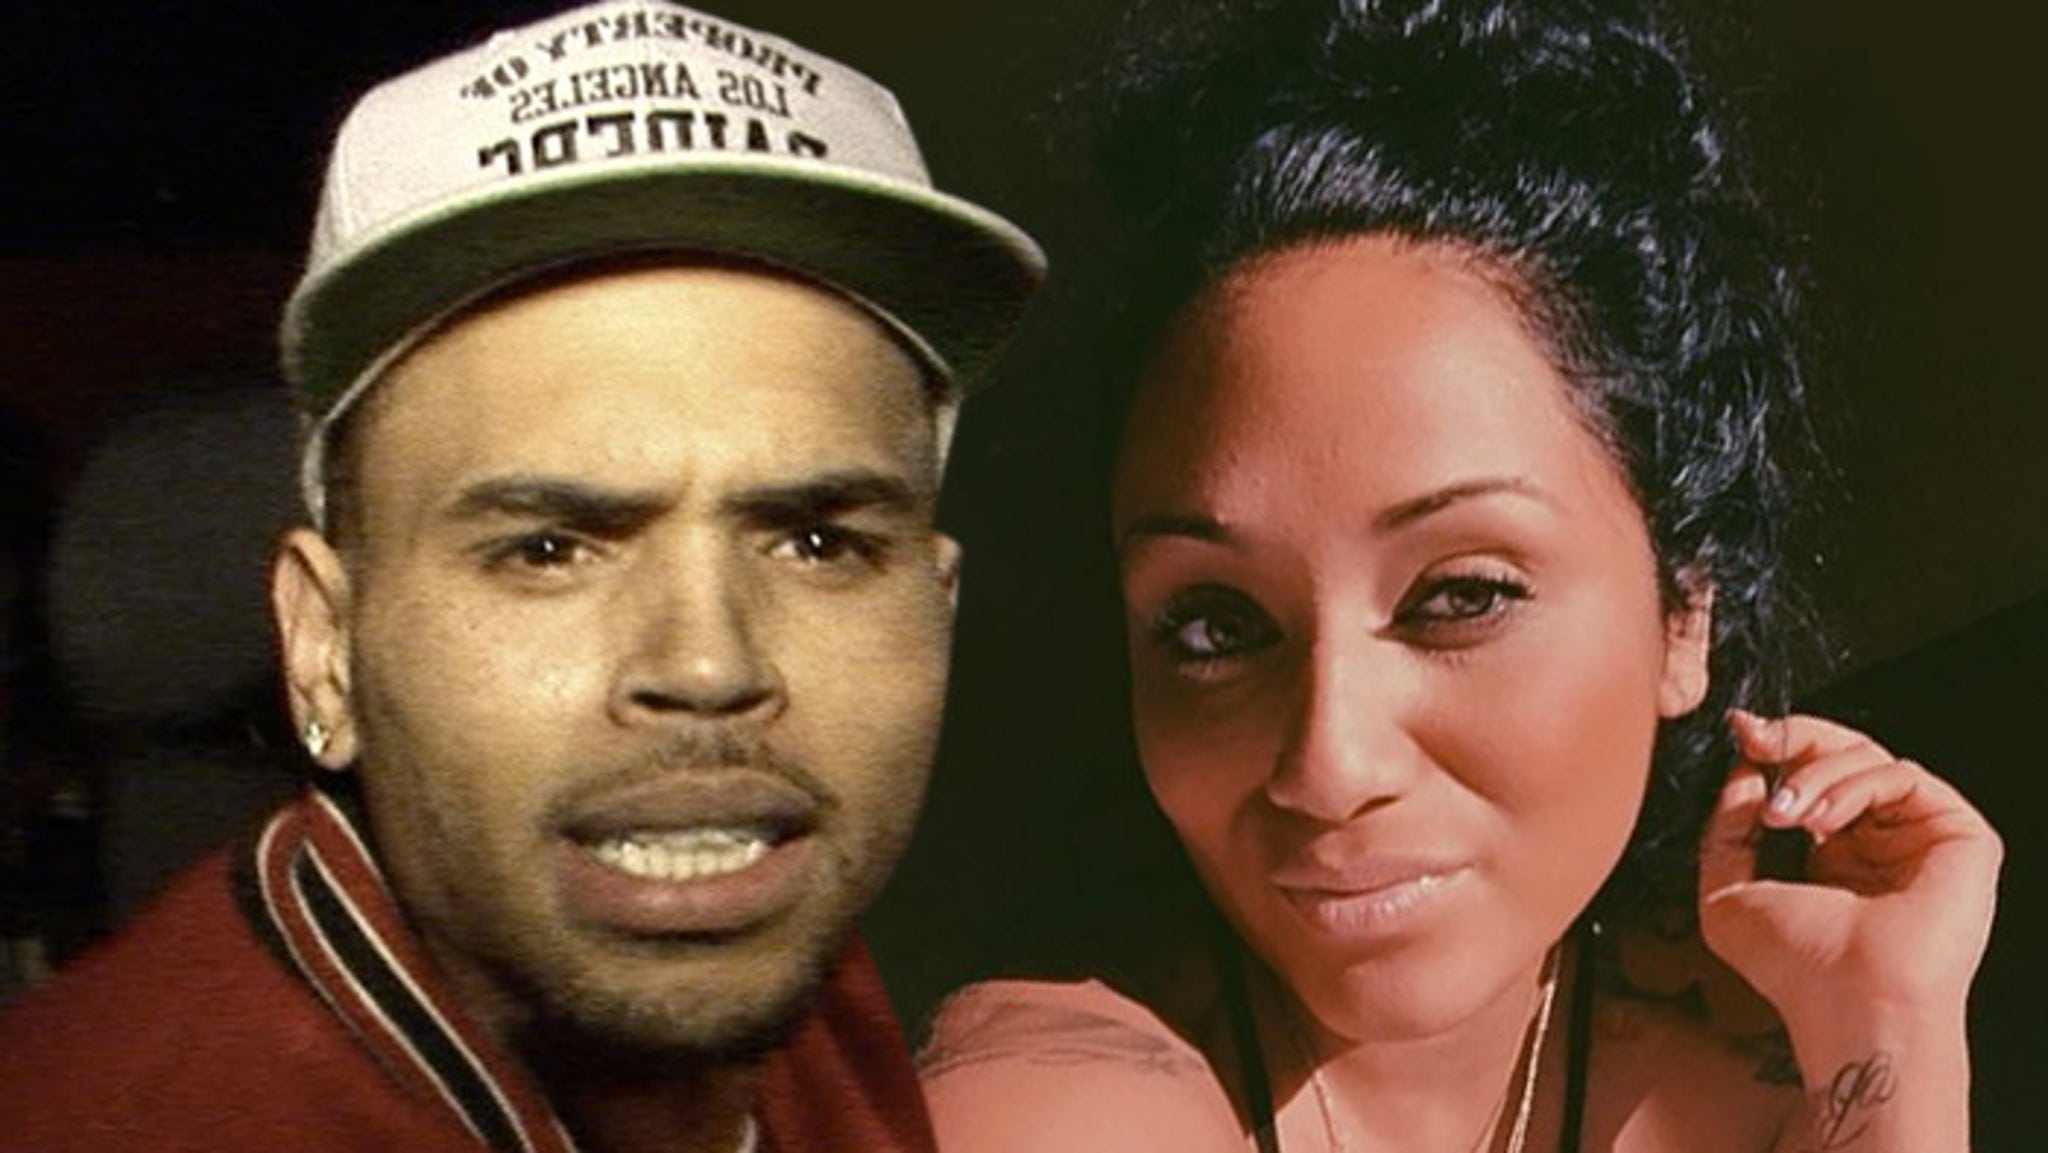 Chris Brown and his baby mama Nia Guzman have settled their custody war